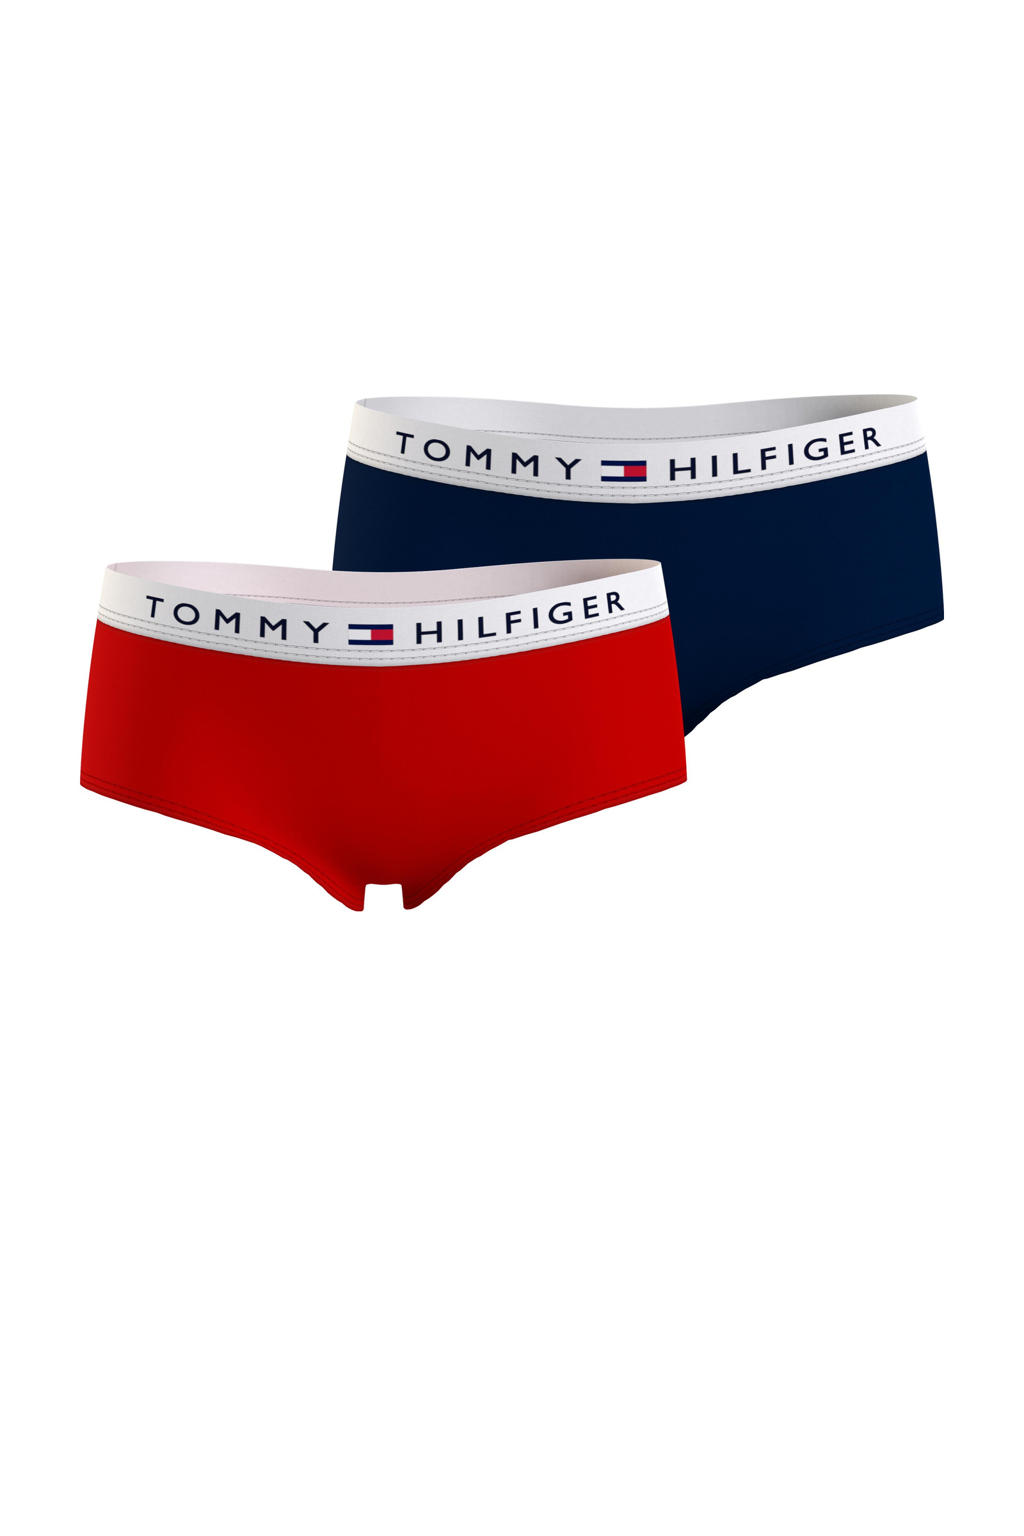 Tommy Hilfiger hipster - set van 2 rood/donkerblauw